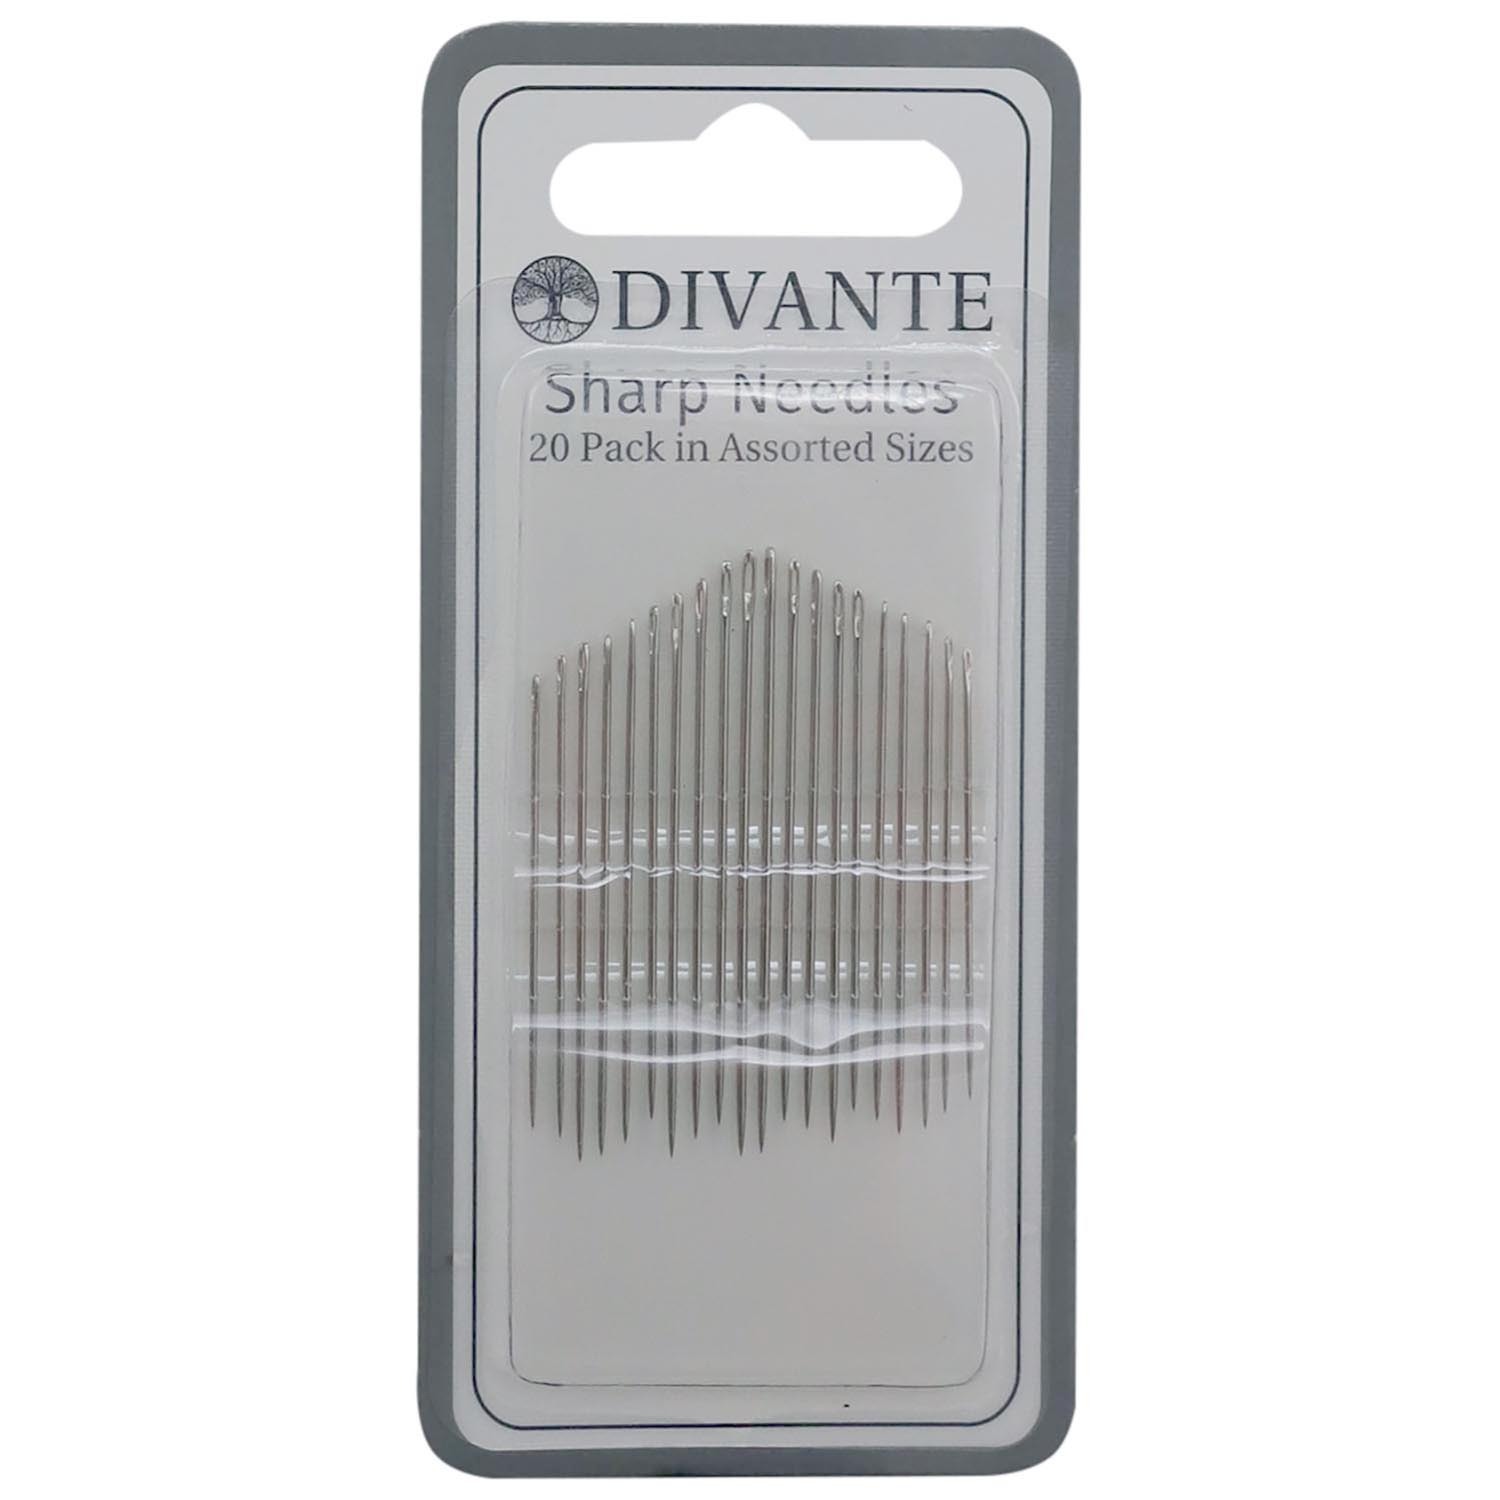 Divante Sharp Needles Assorted Sizes 20 Pack Image